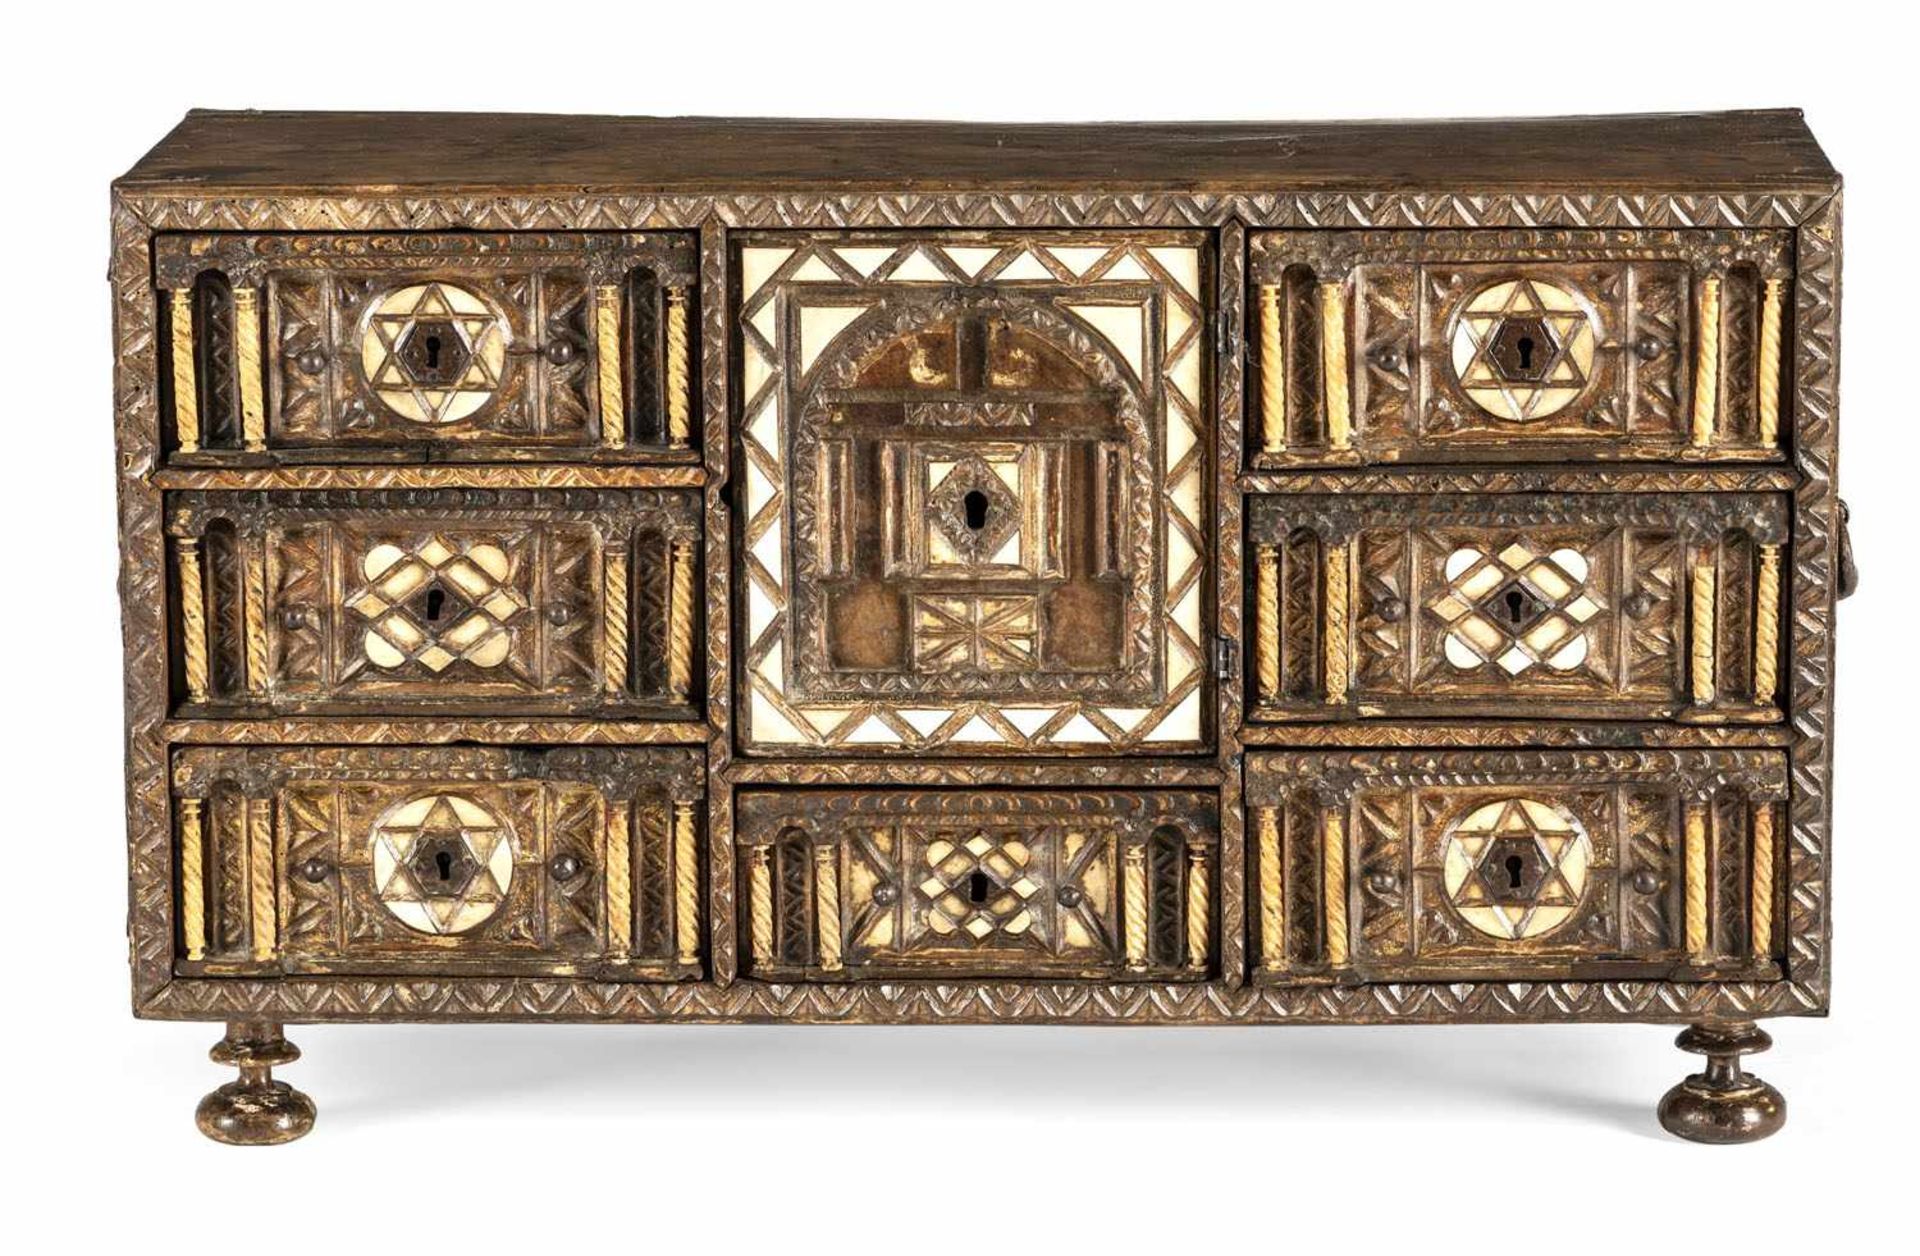 A Renaissance iron mounted, bone inlaid walnut cabinet, Spain, c. 1600. Rest. Add. Minor damages.